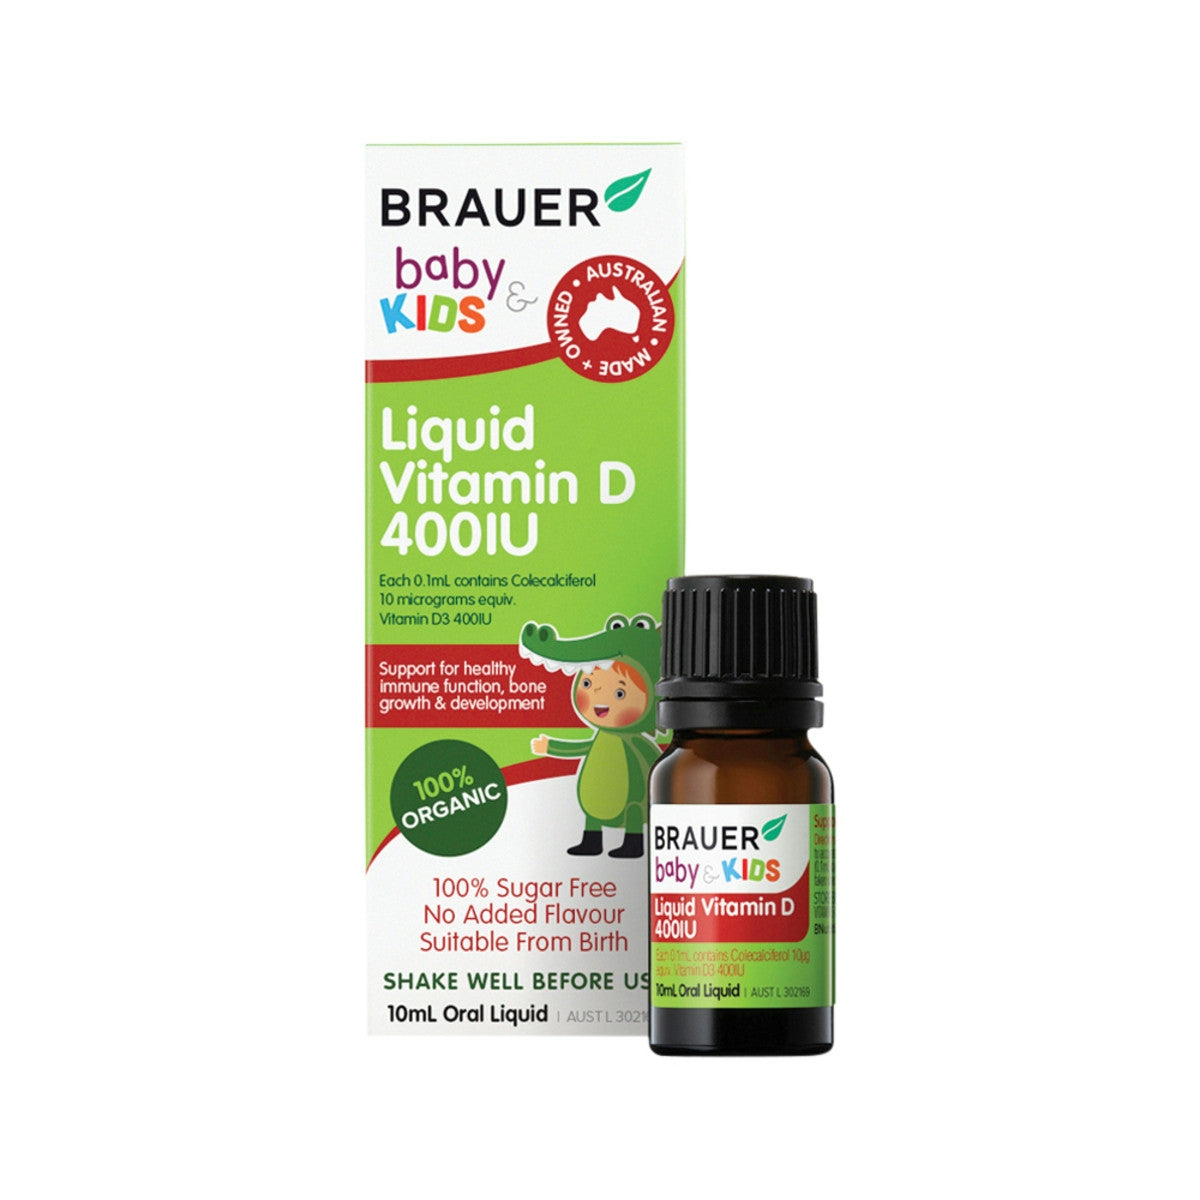 image of Brauer Baby & Kids Liquid Vitamin D 400IU Oral Liquid 10ml on white background